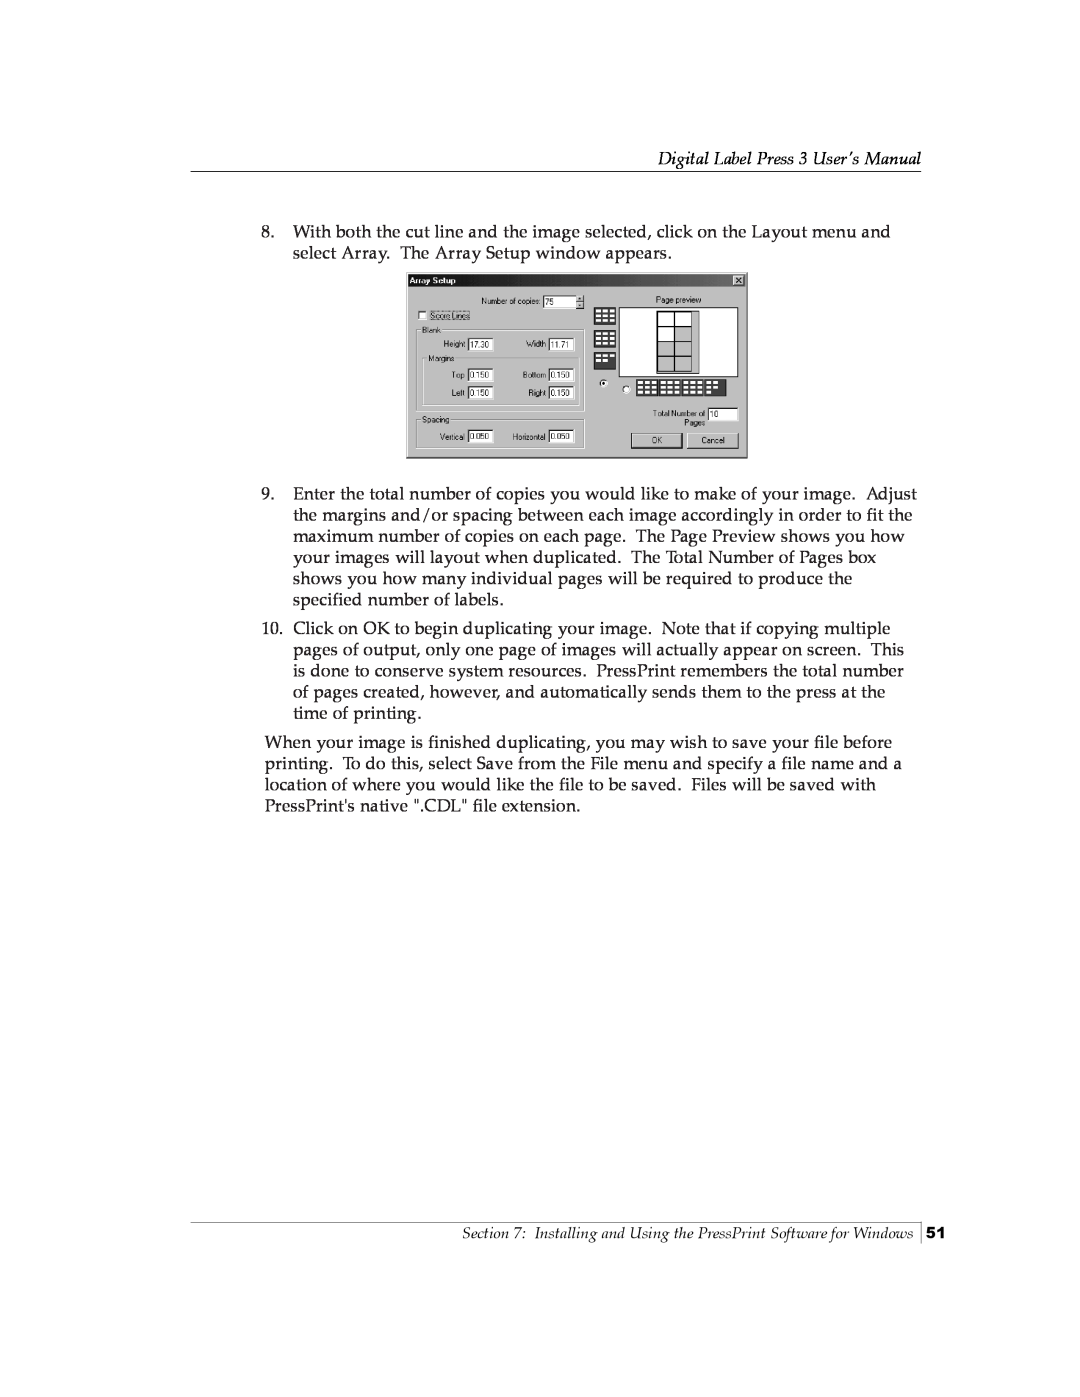 Primera Technology 510212 manual Digital Label Press 3 User’s Manual 